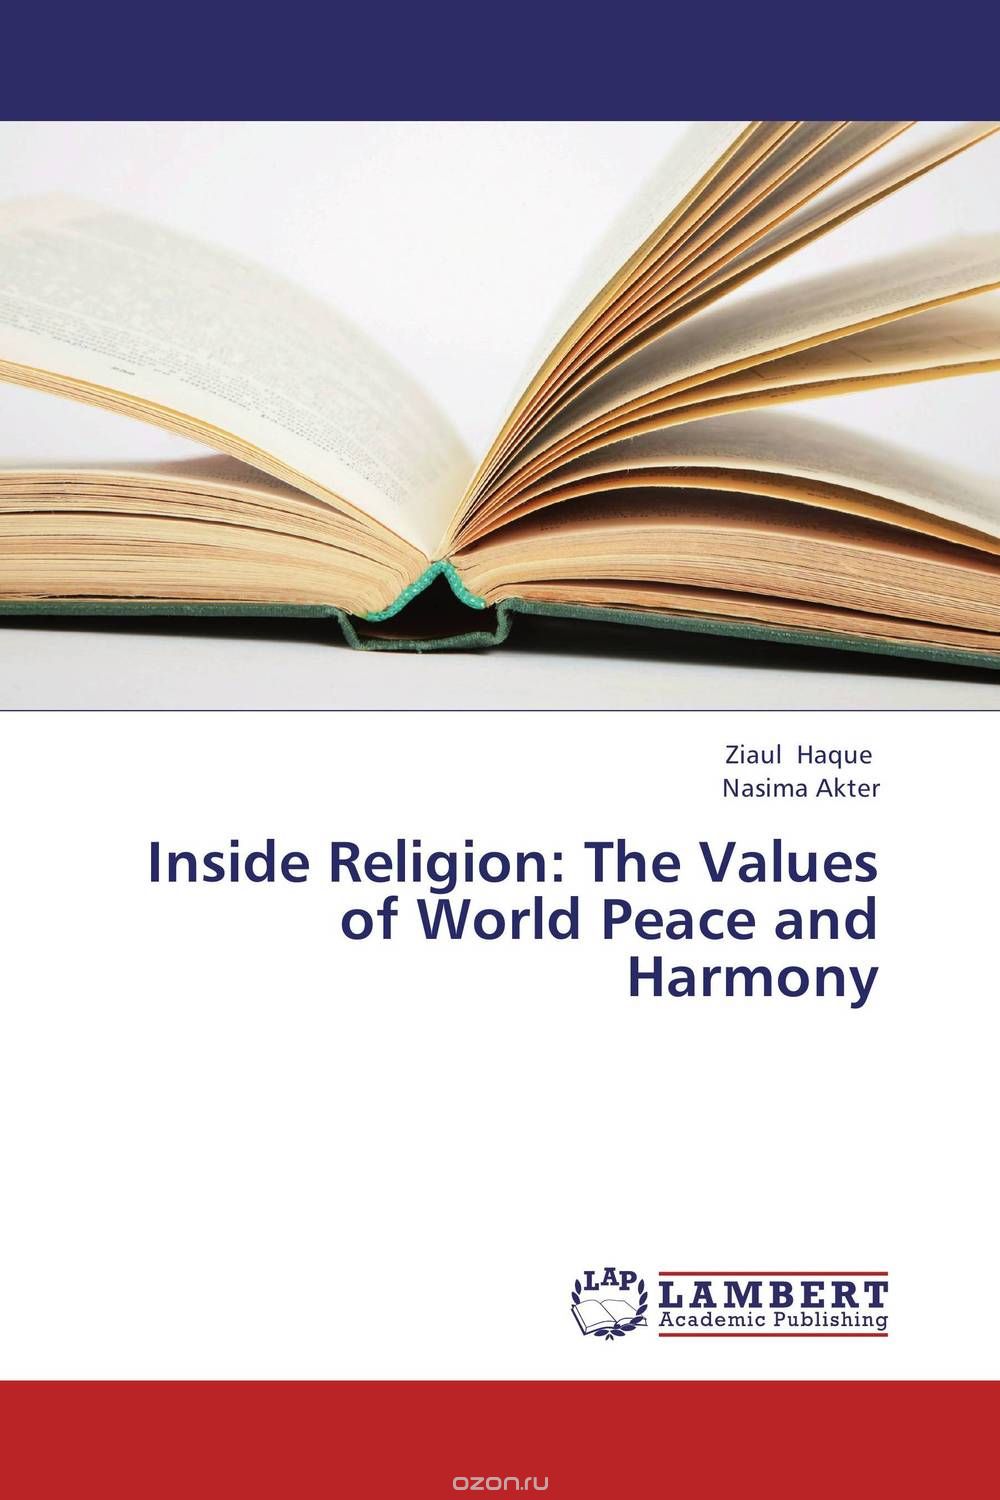 Скачать книгу "Inside Religion: The Values of World Peace and Harmony"